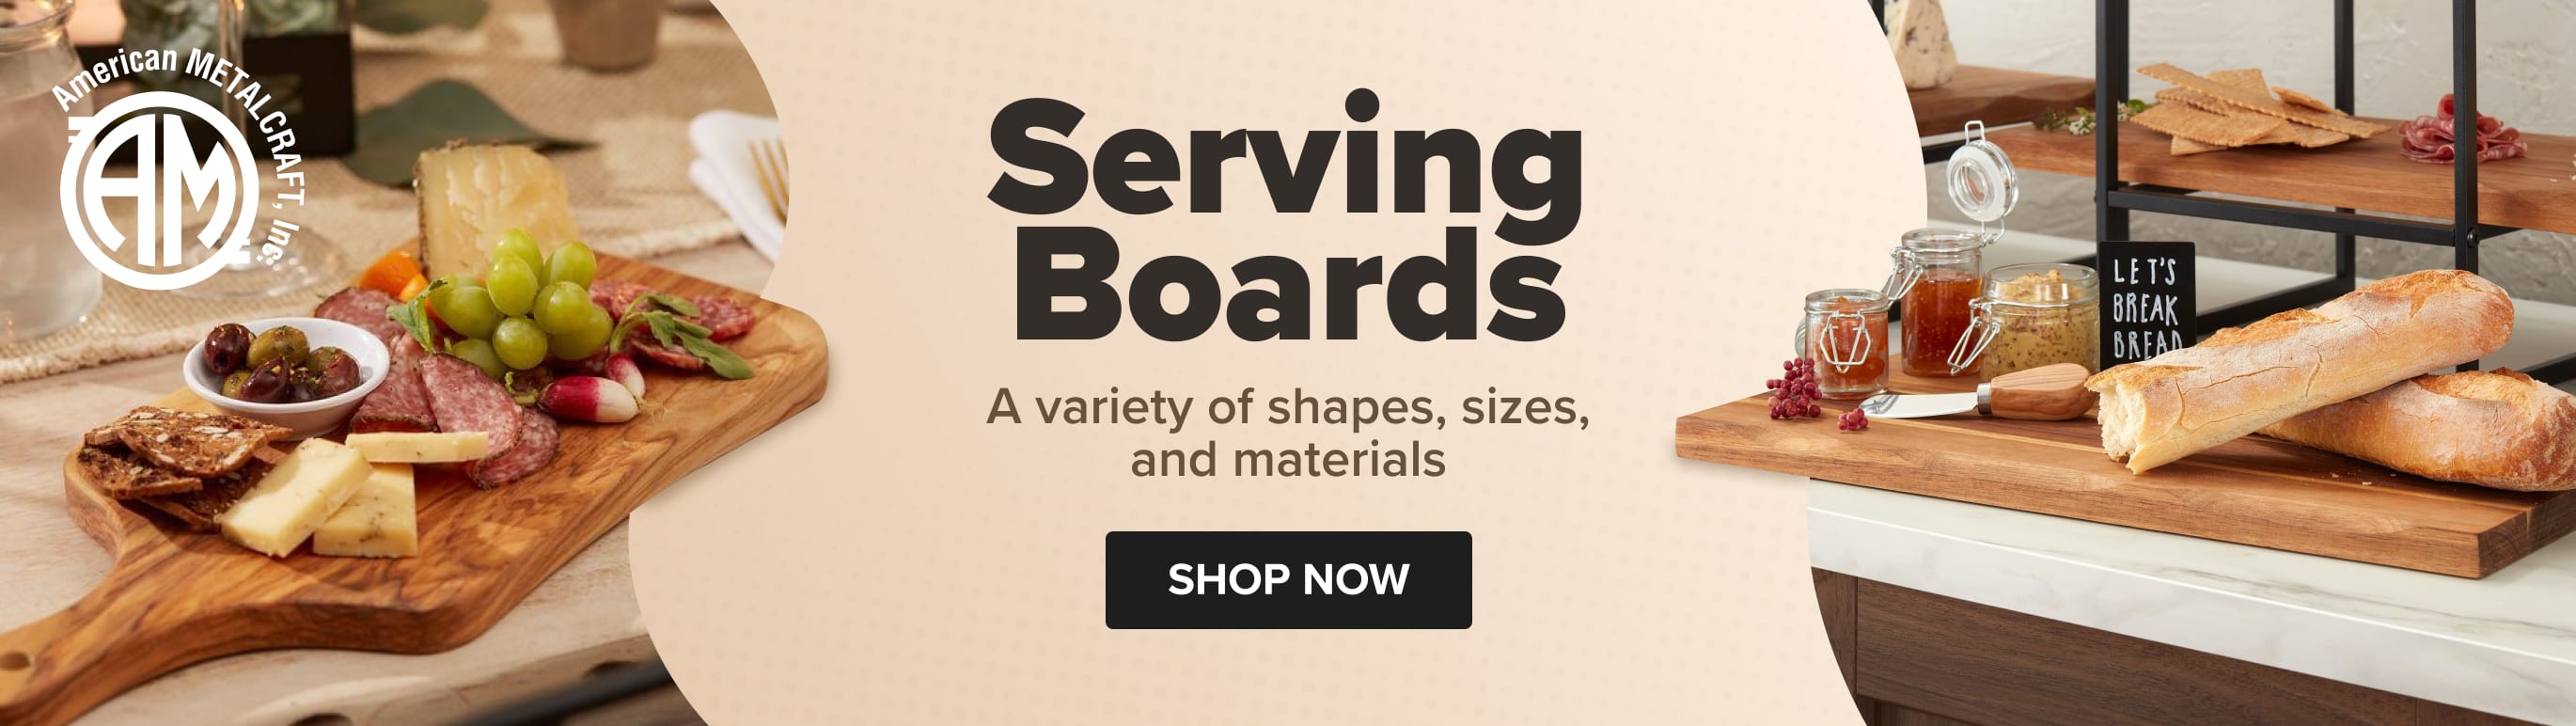 American Metalcraft serving boards